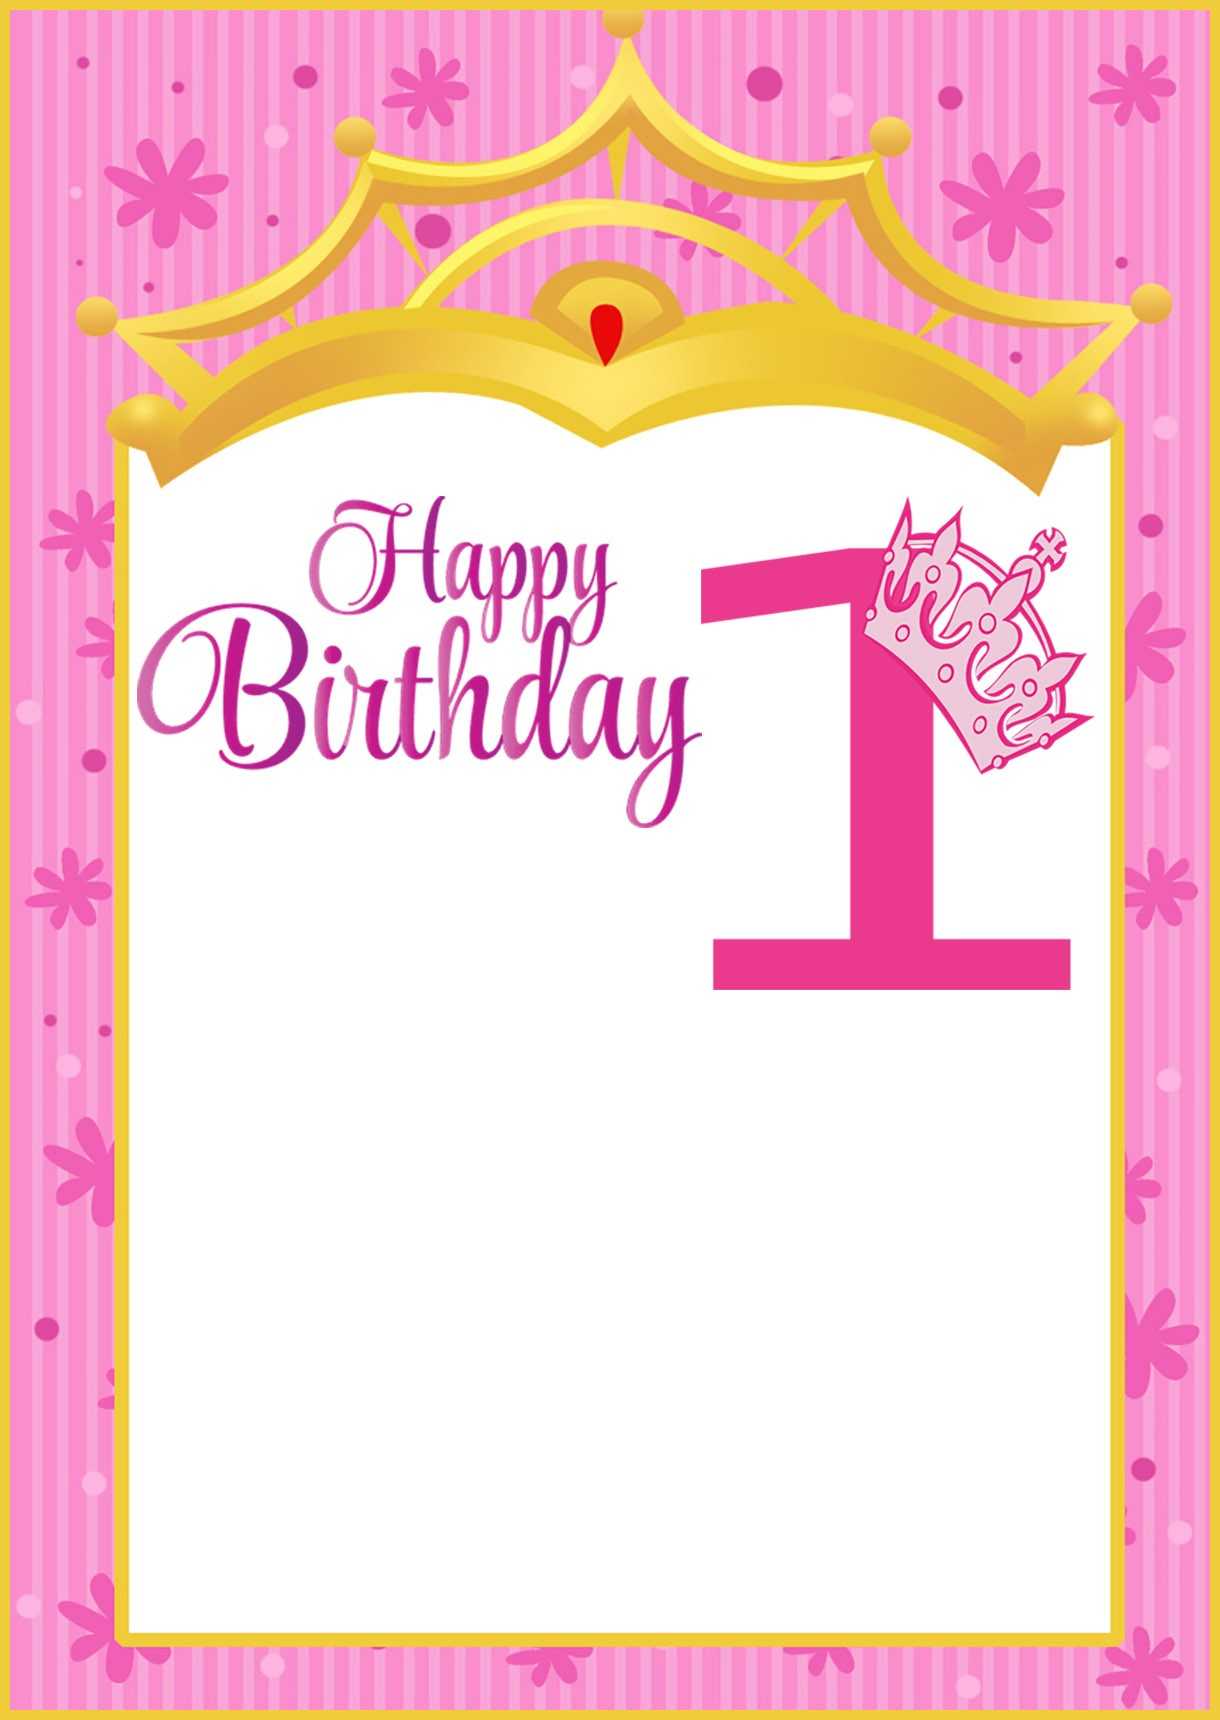 Printable First Birthday Invitation Card | Invitations Online In First Birthday Invitation Card Template